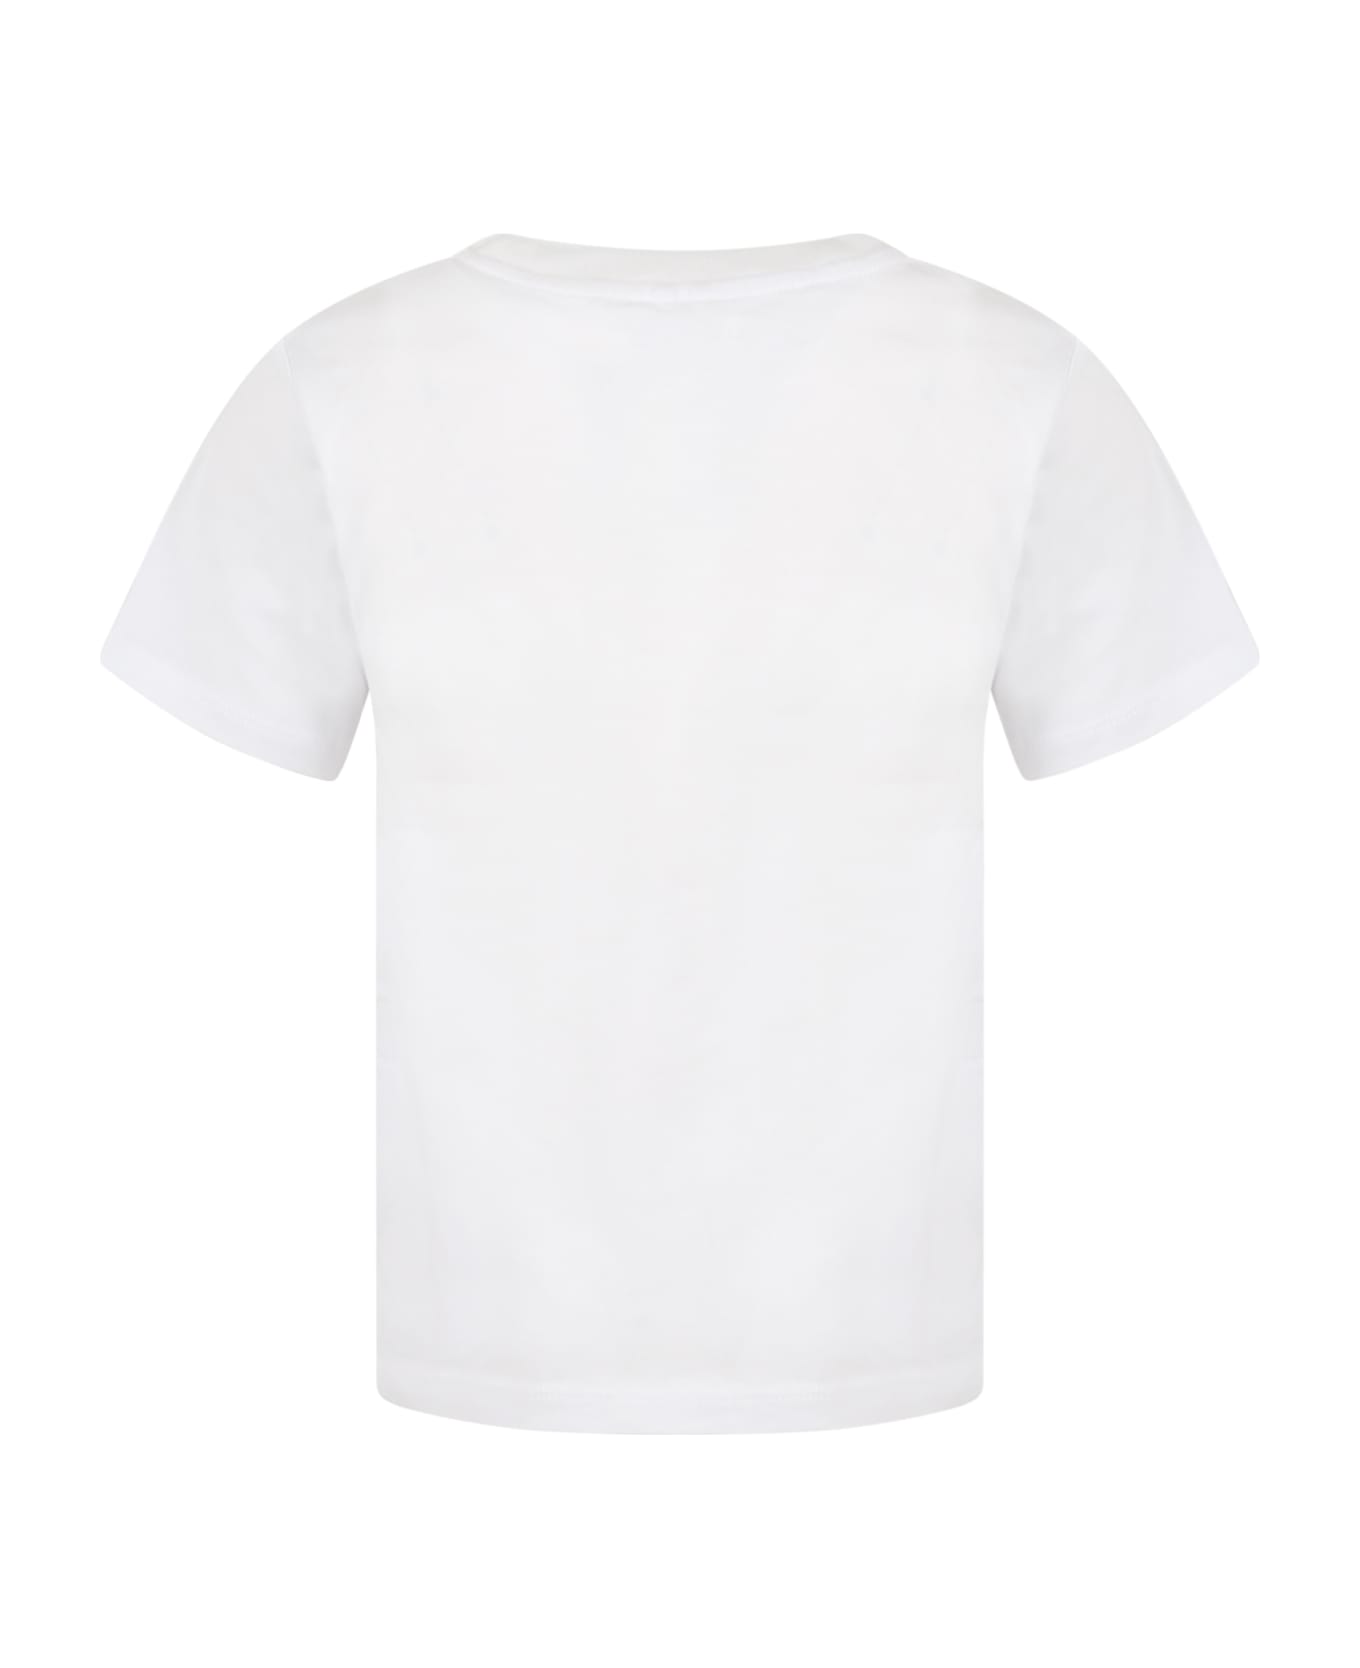 Stella McCartney Kids White T-shirt For Boy - White